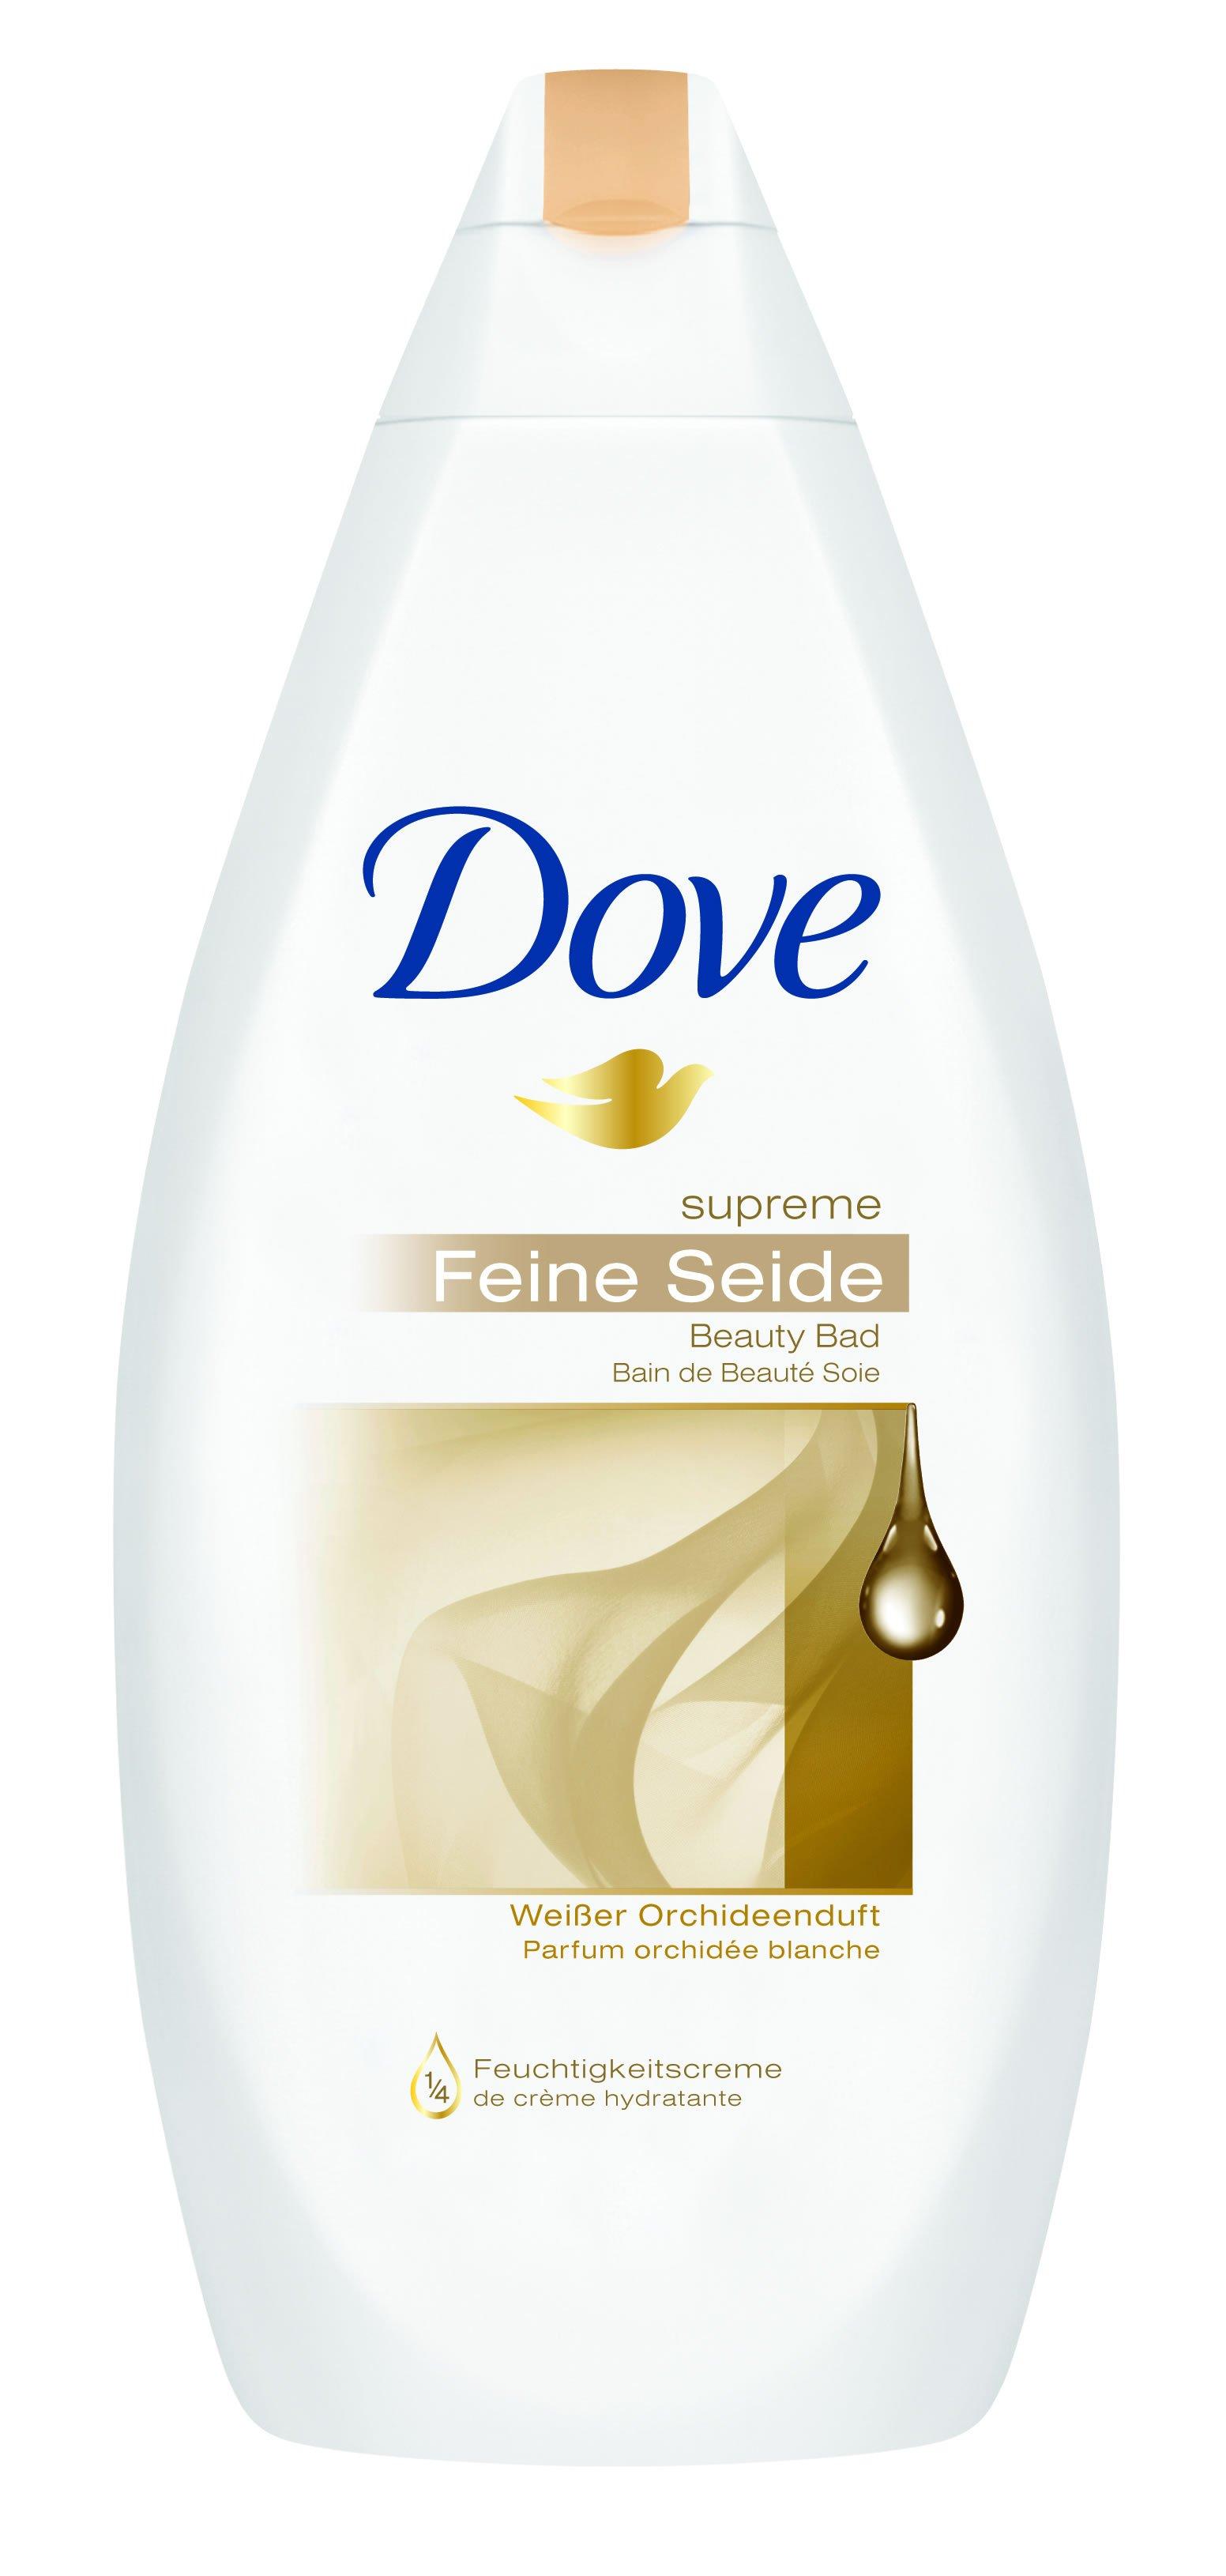 Image of Dove Supreme Beauty Bad Feine Seide - 750ml